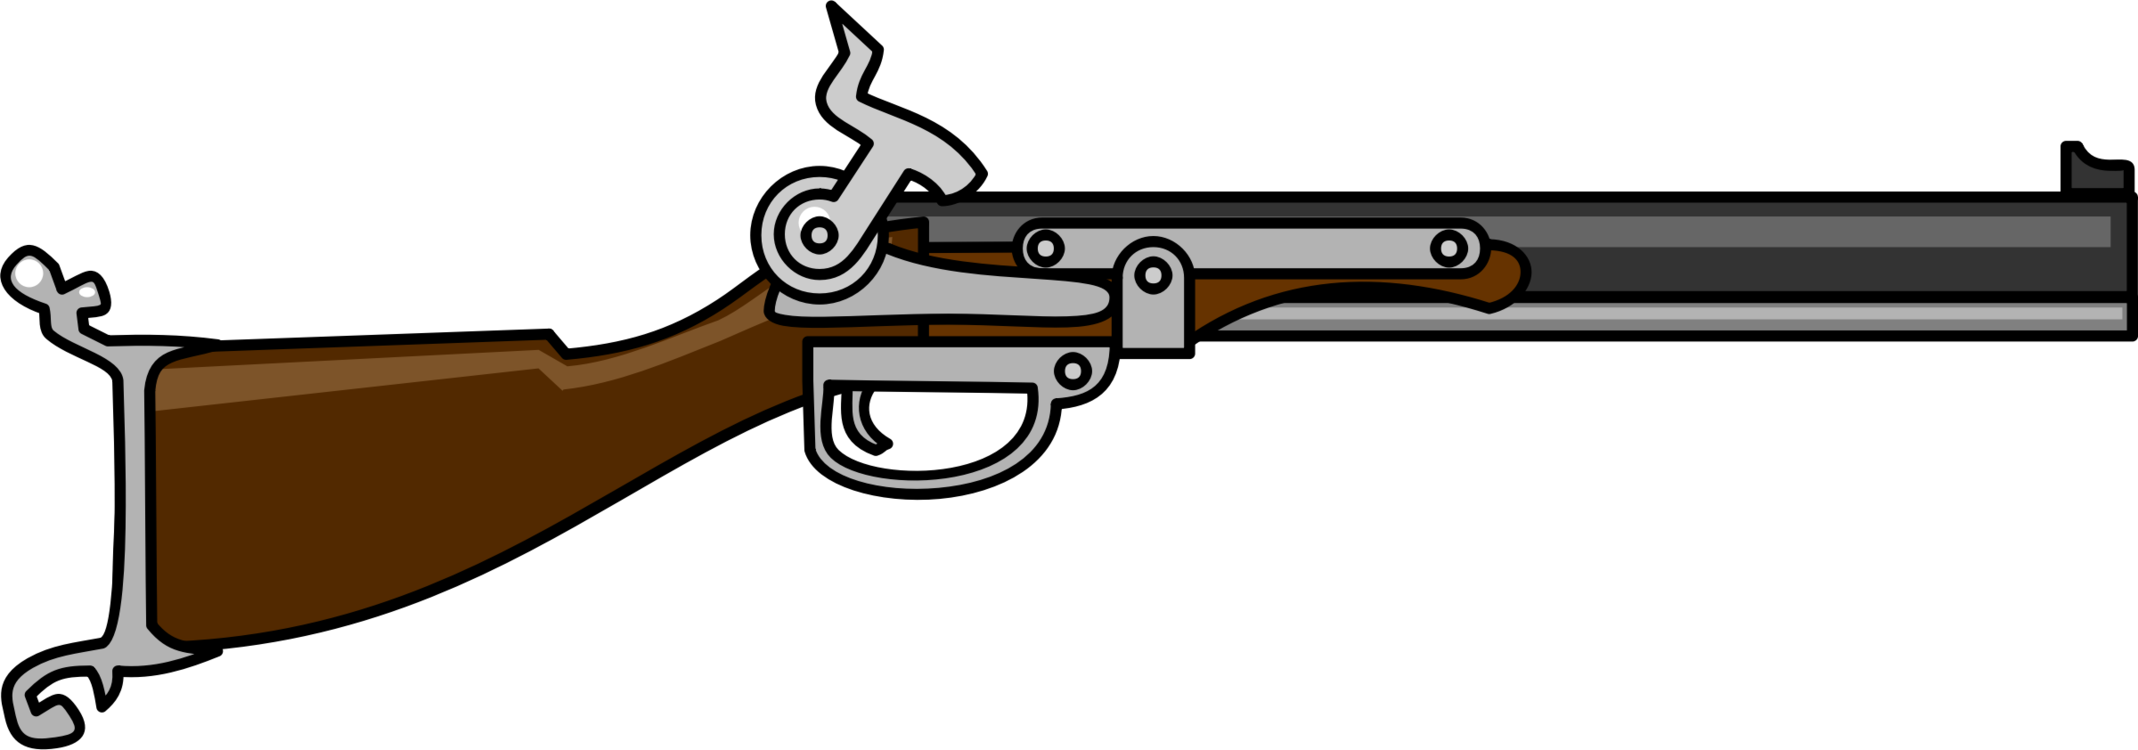 Gun Barrel,Shotgun,Ranged Weapon